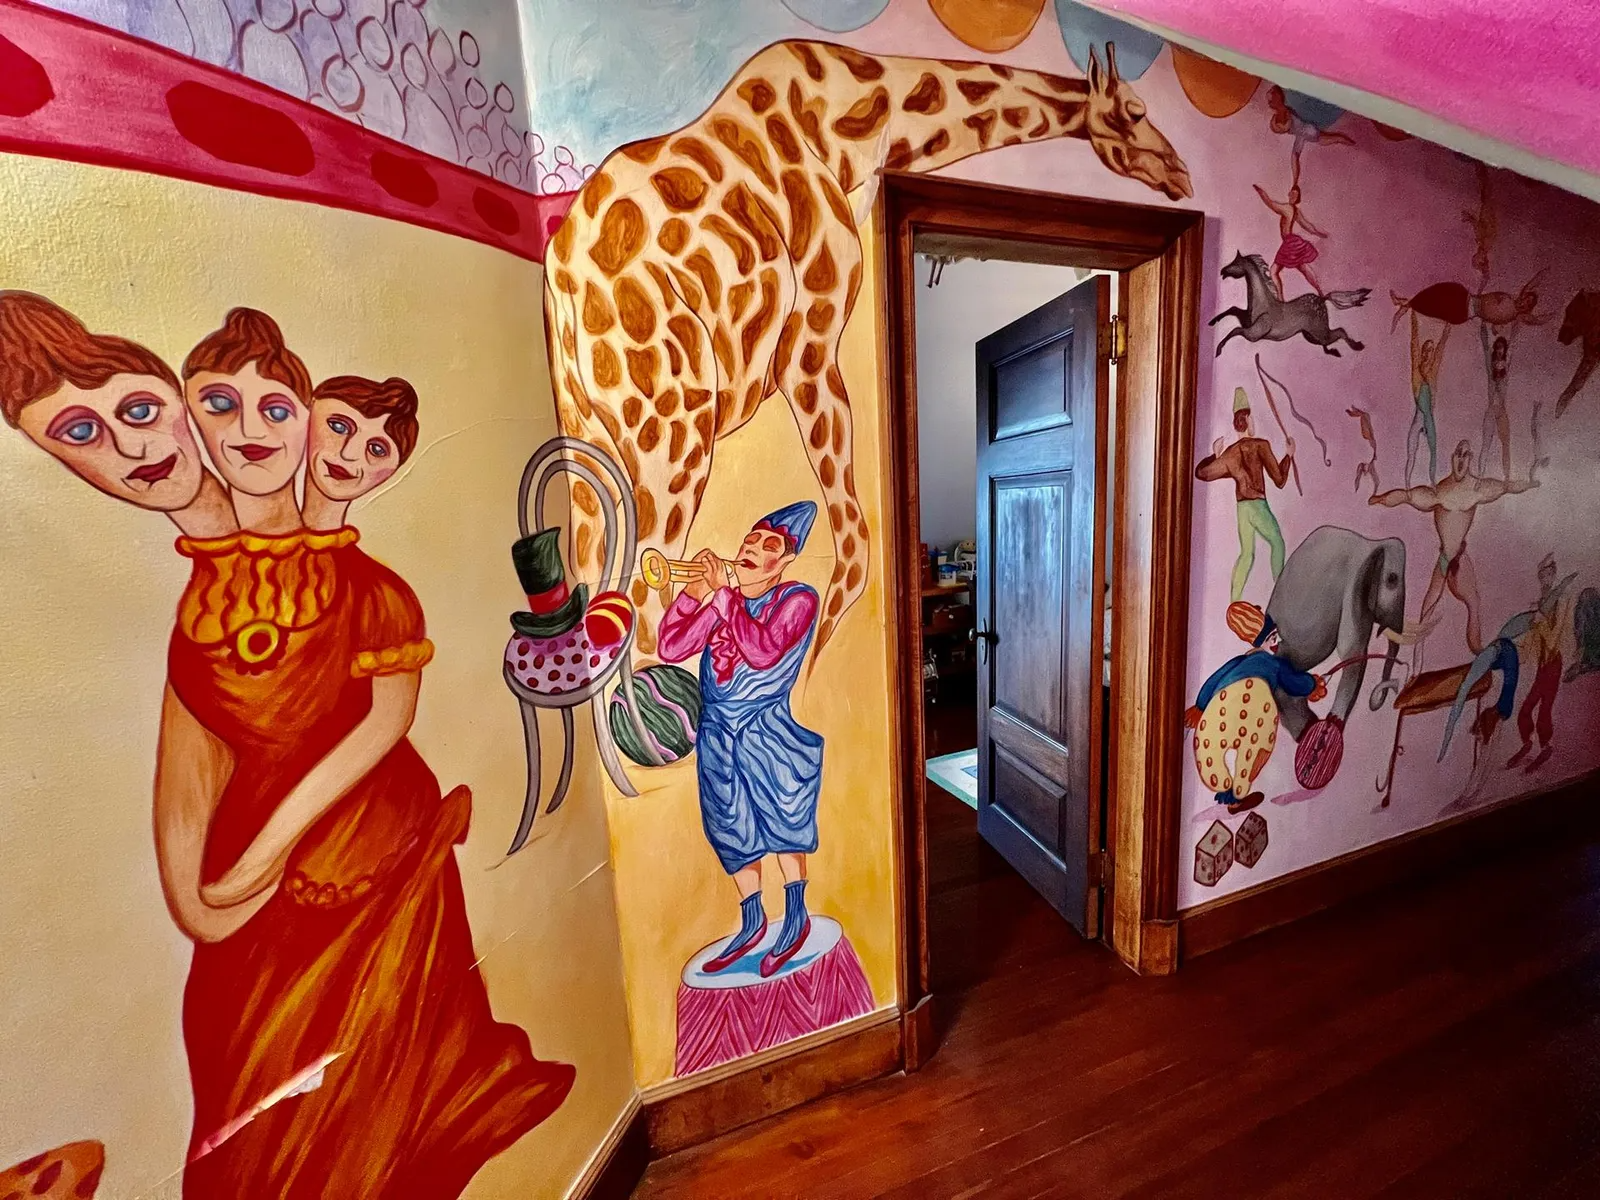 hand painted circus themed illustrations along several walls